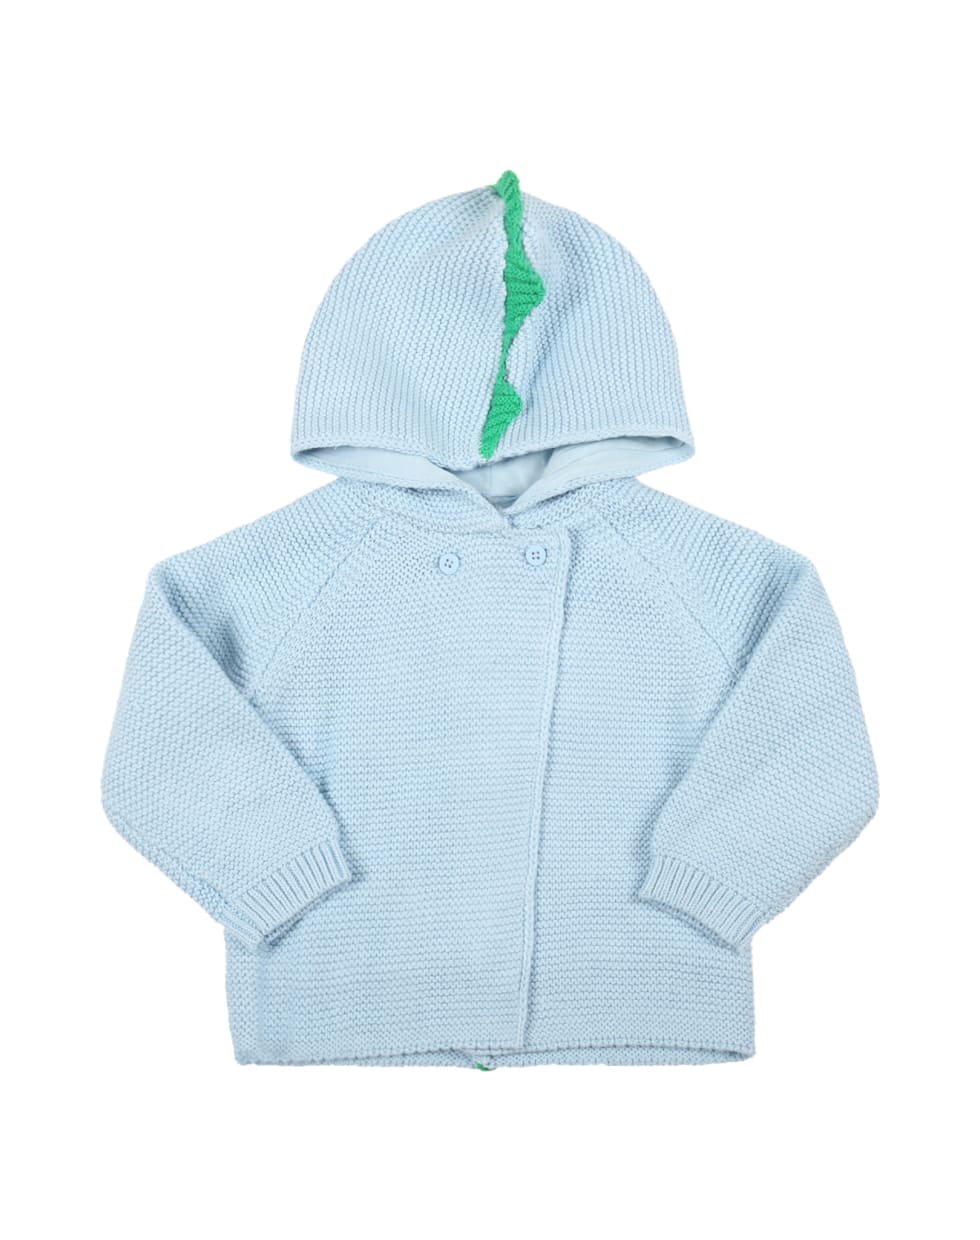 Stella McCartney Kids Light-blue Cardigan For Baby Boy With Quills - Light Blue